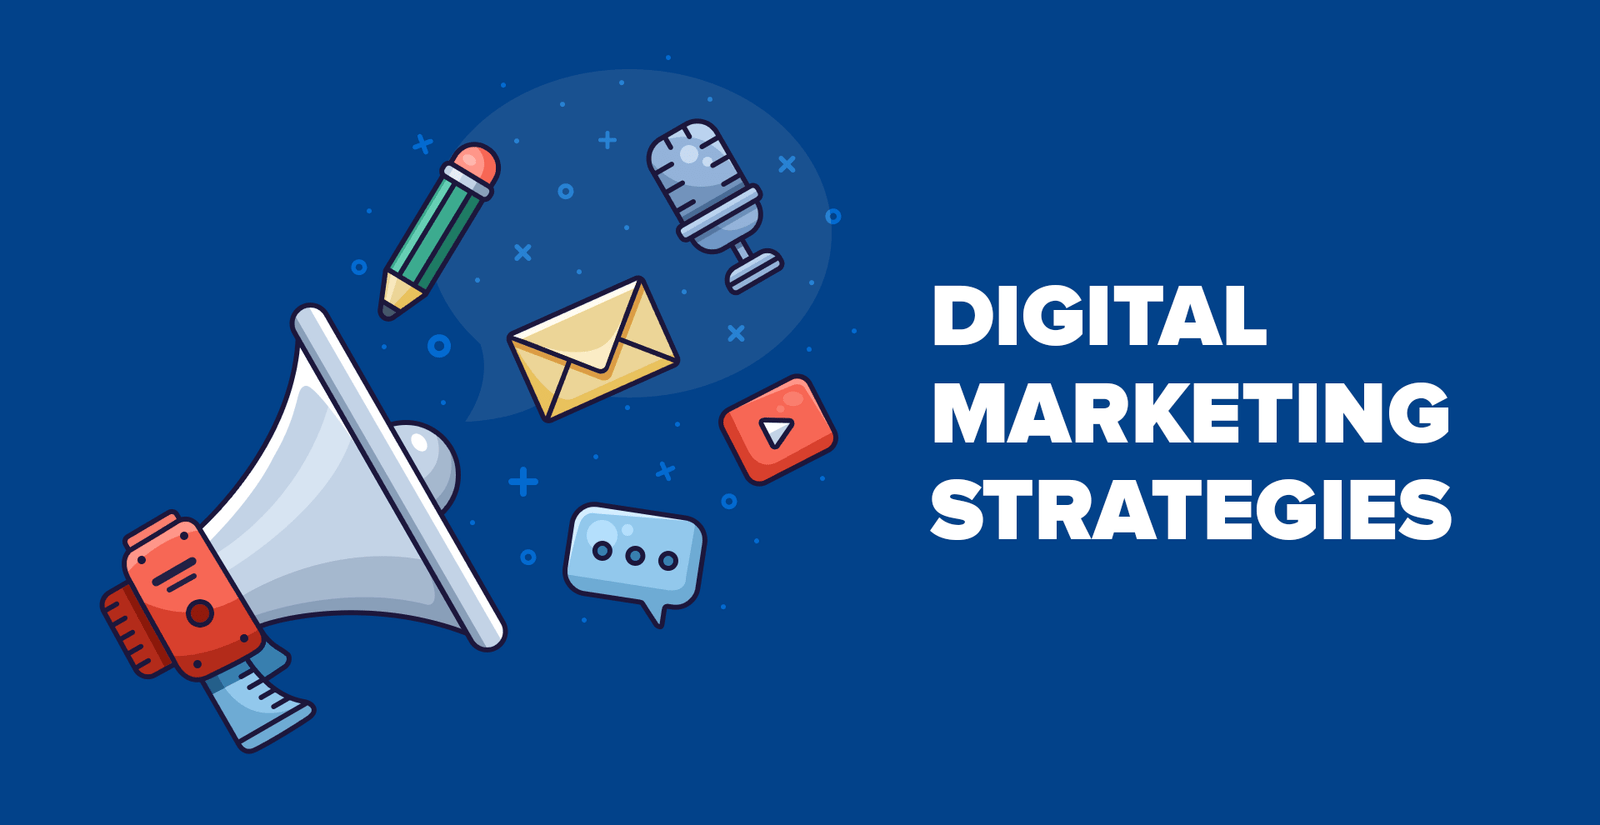 Digital Marketing Strategy: 10 Important Considerations